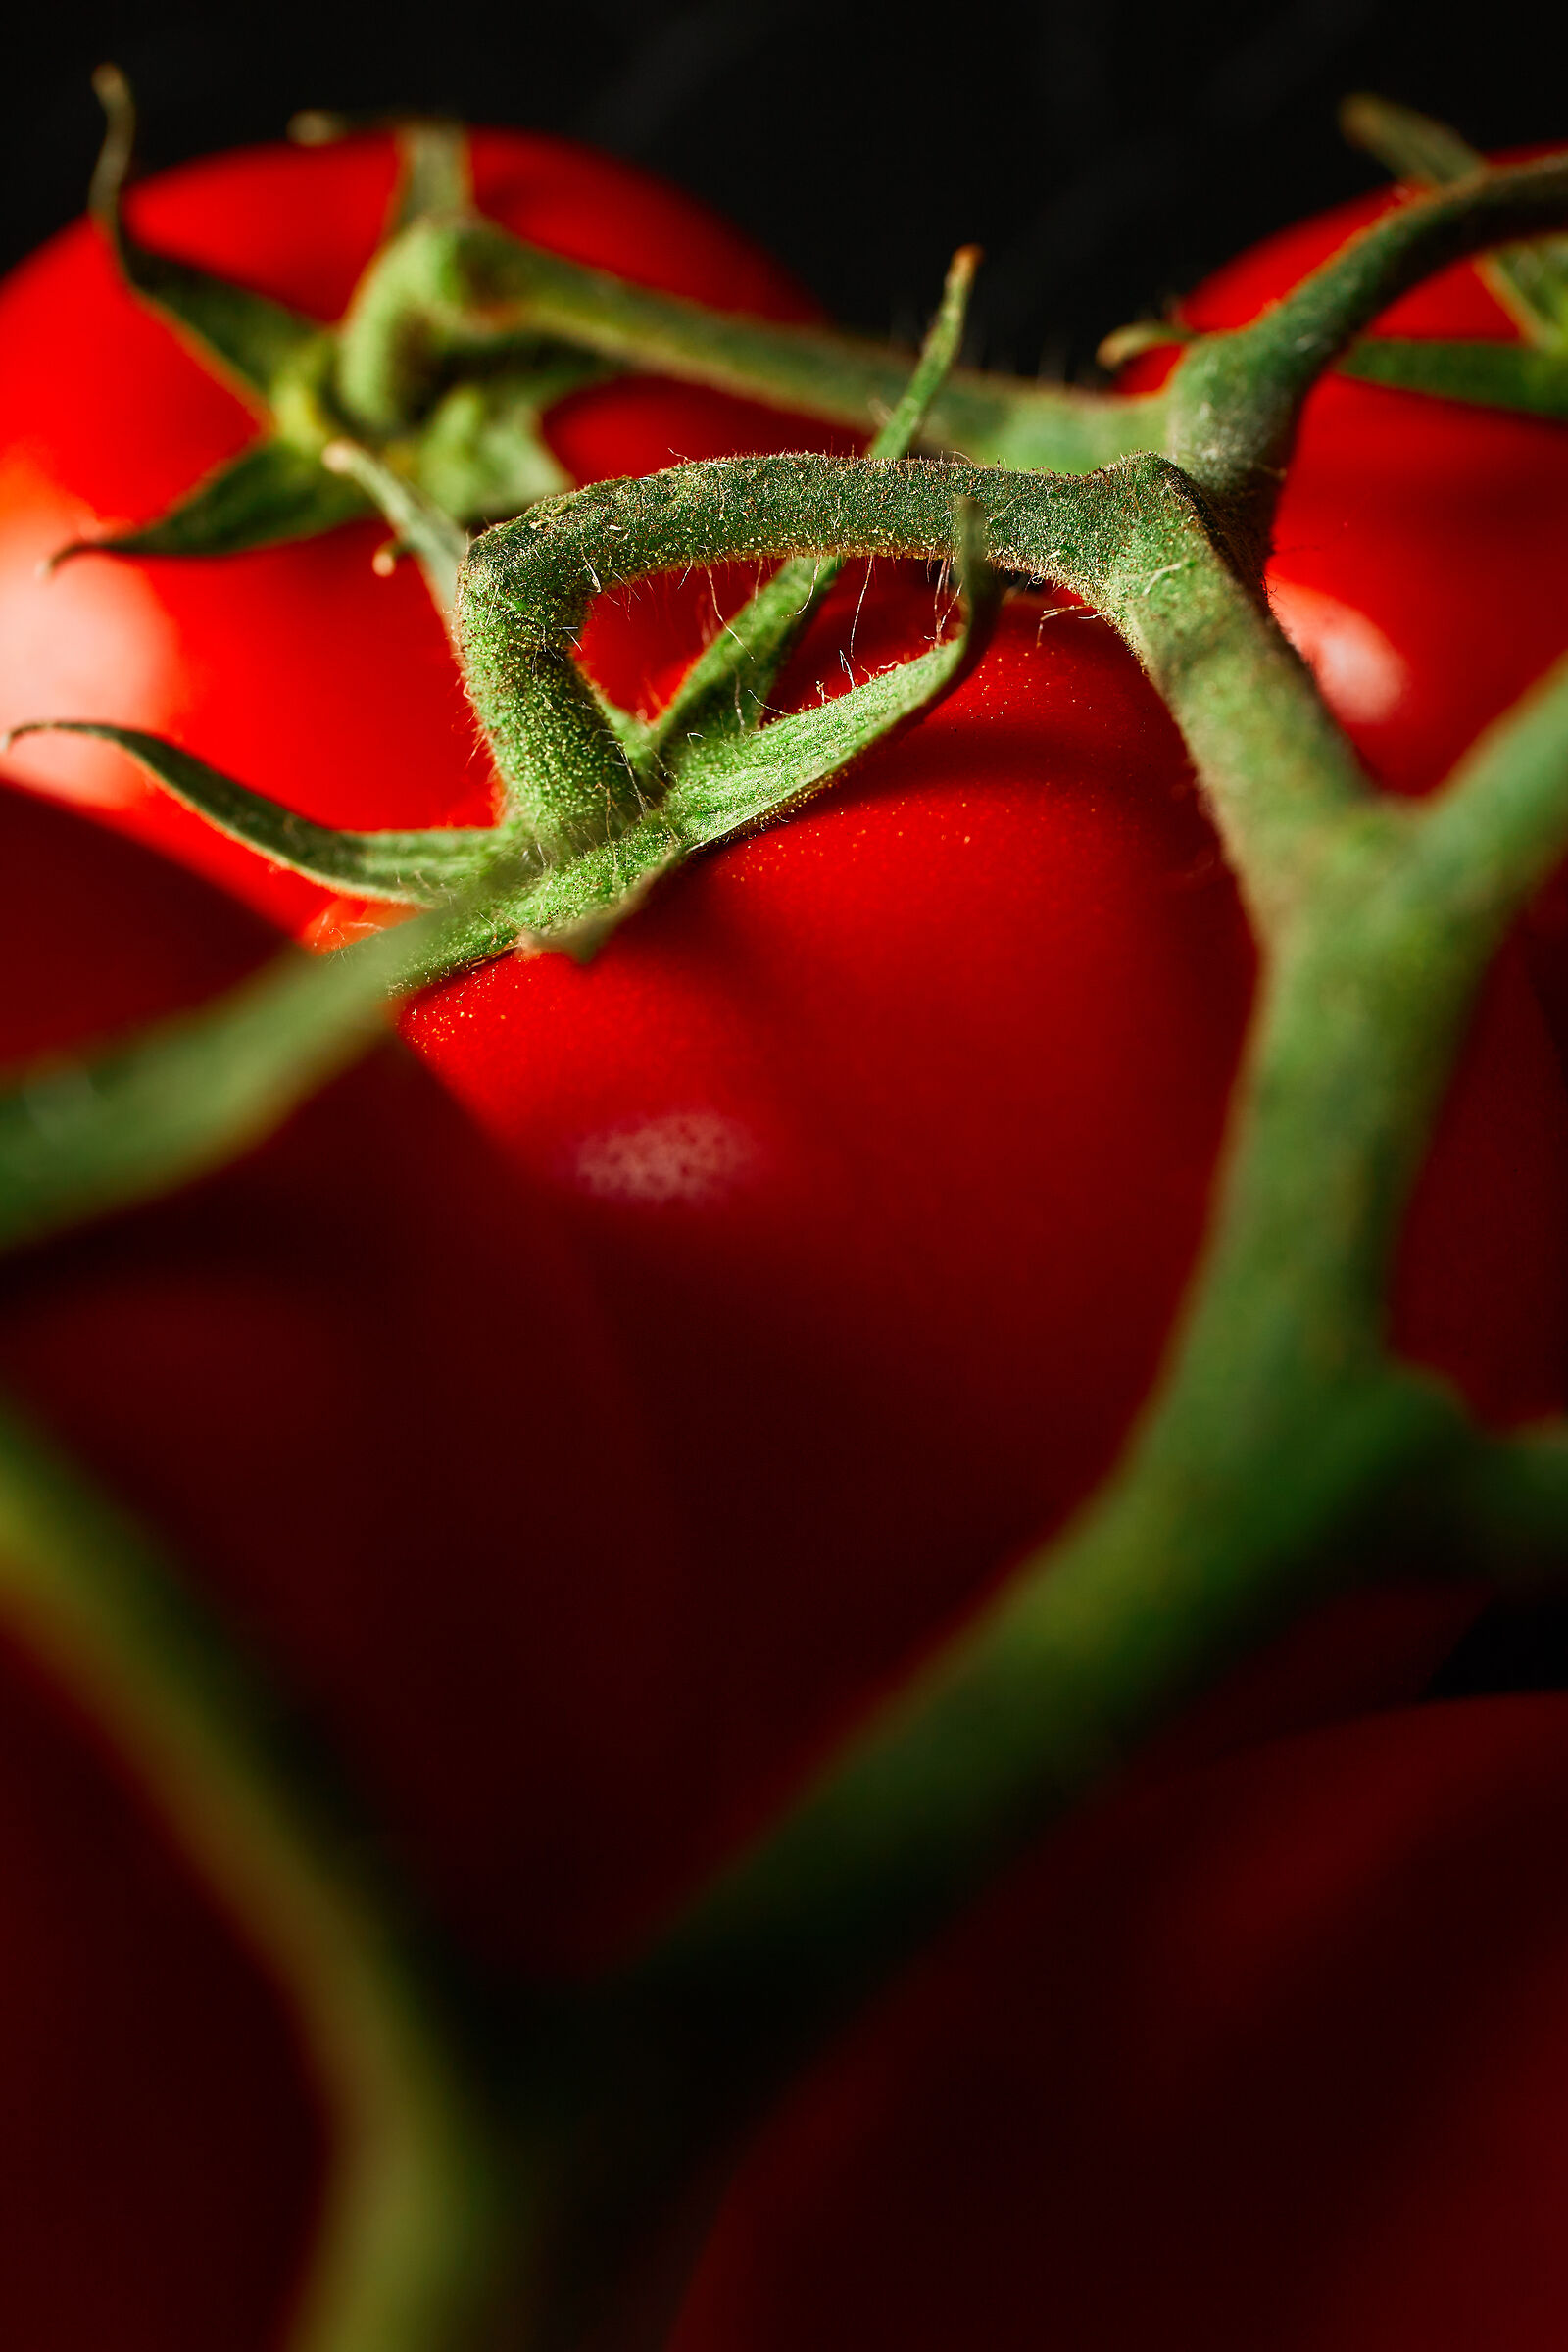 Tomatoes...